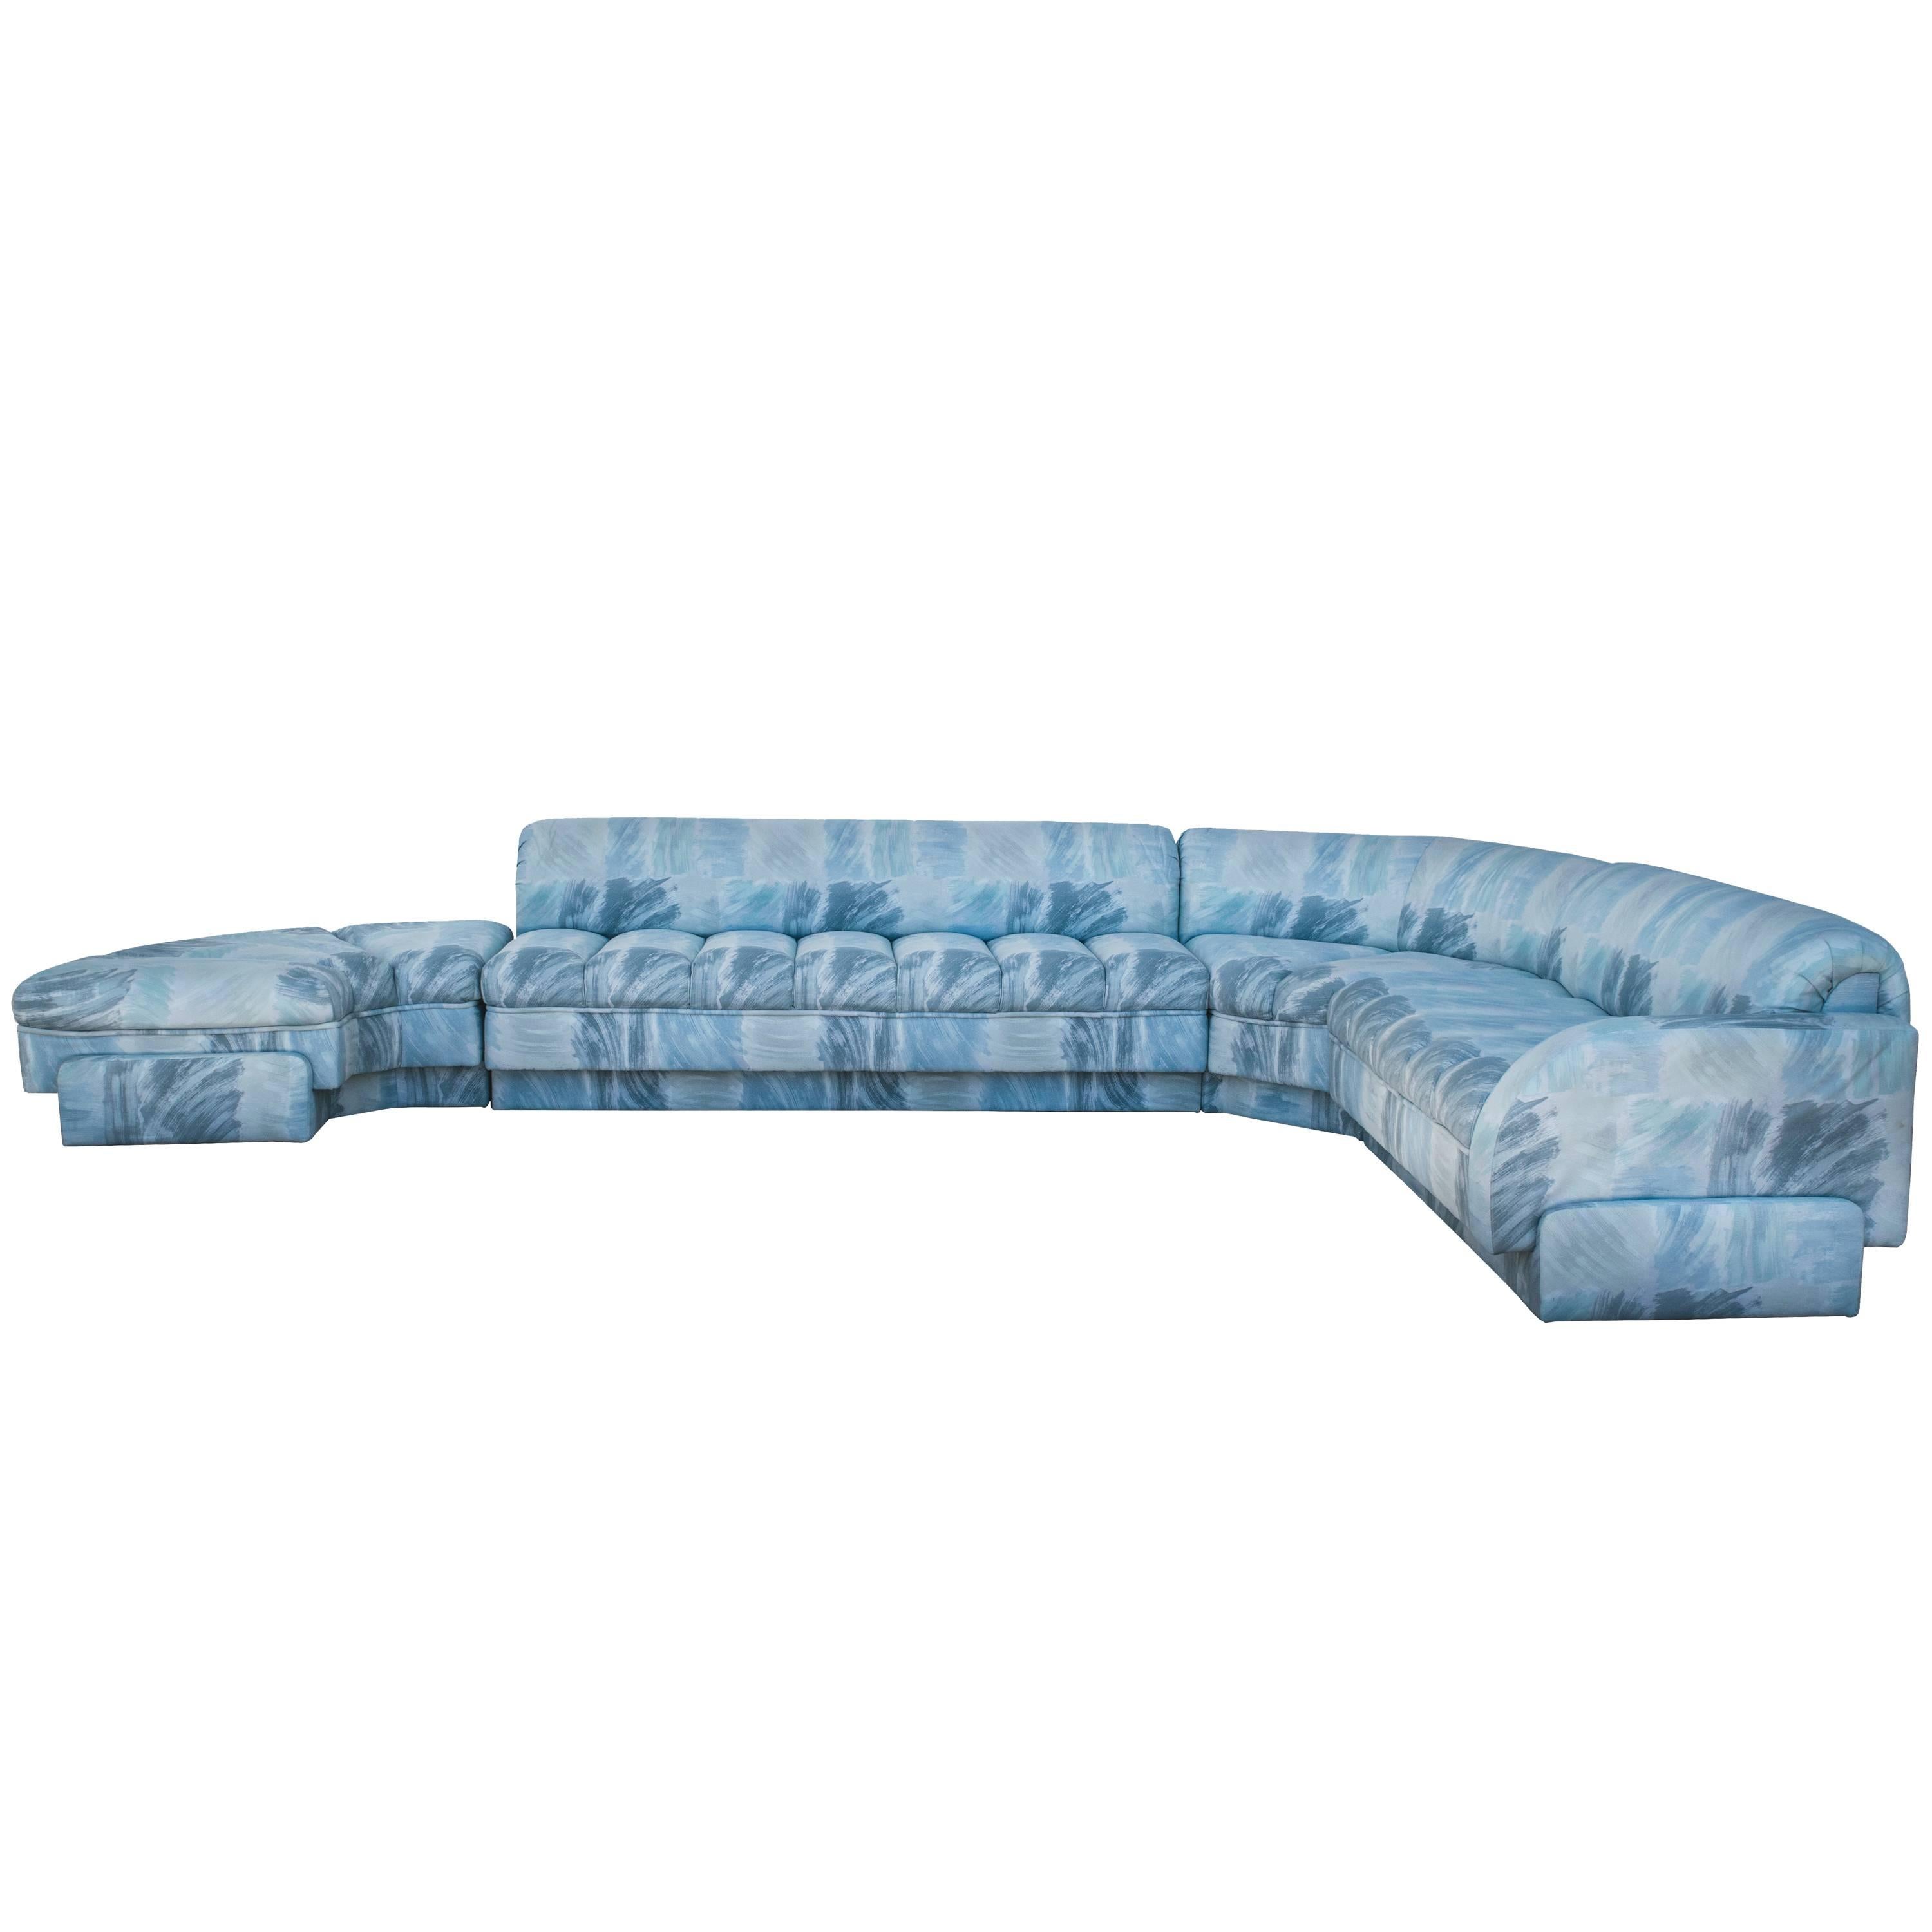 Custom Vladimir Kagan Sectional Sofa for Directional For Sale